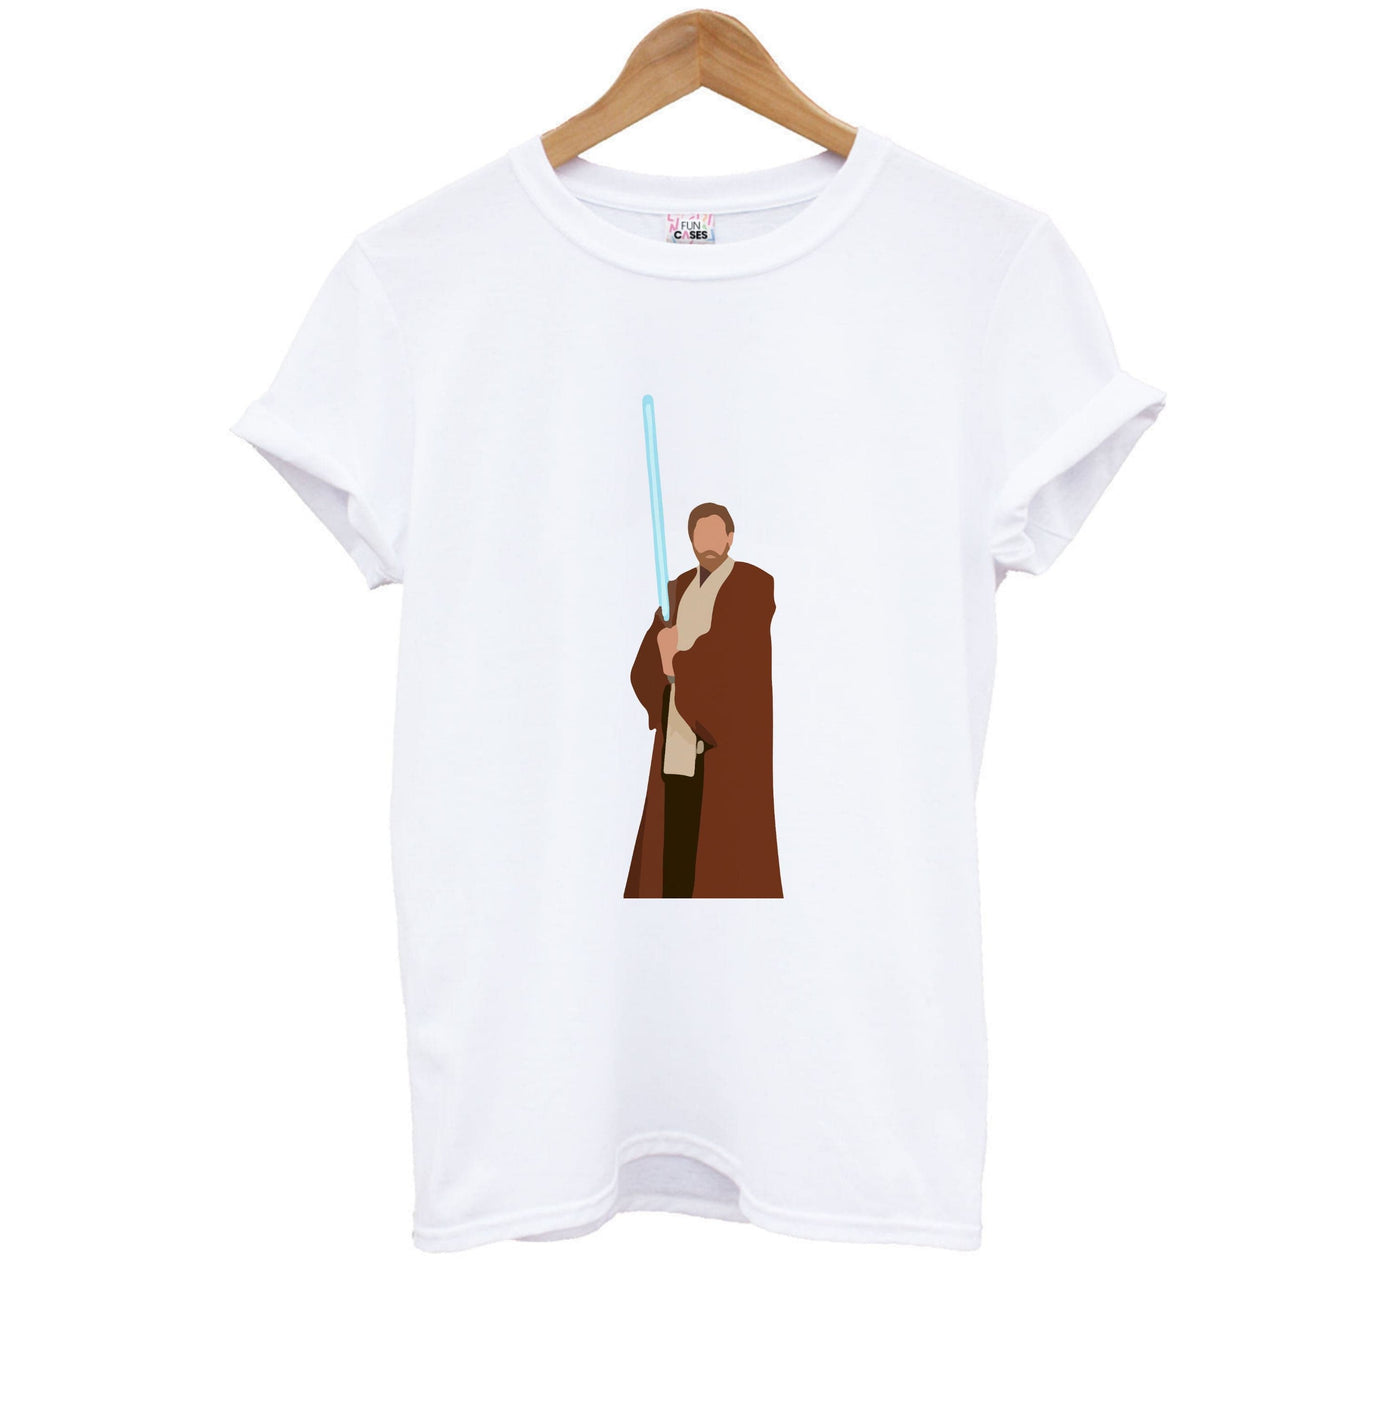 Obi-Wan Kenobi Blue Lightsaber - Star Wars Kids T-Shirt